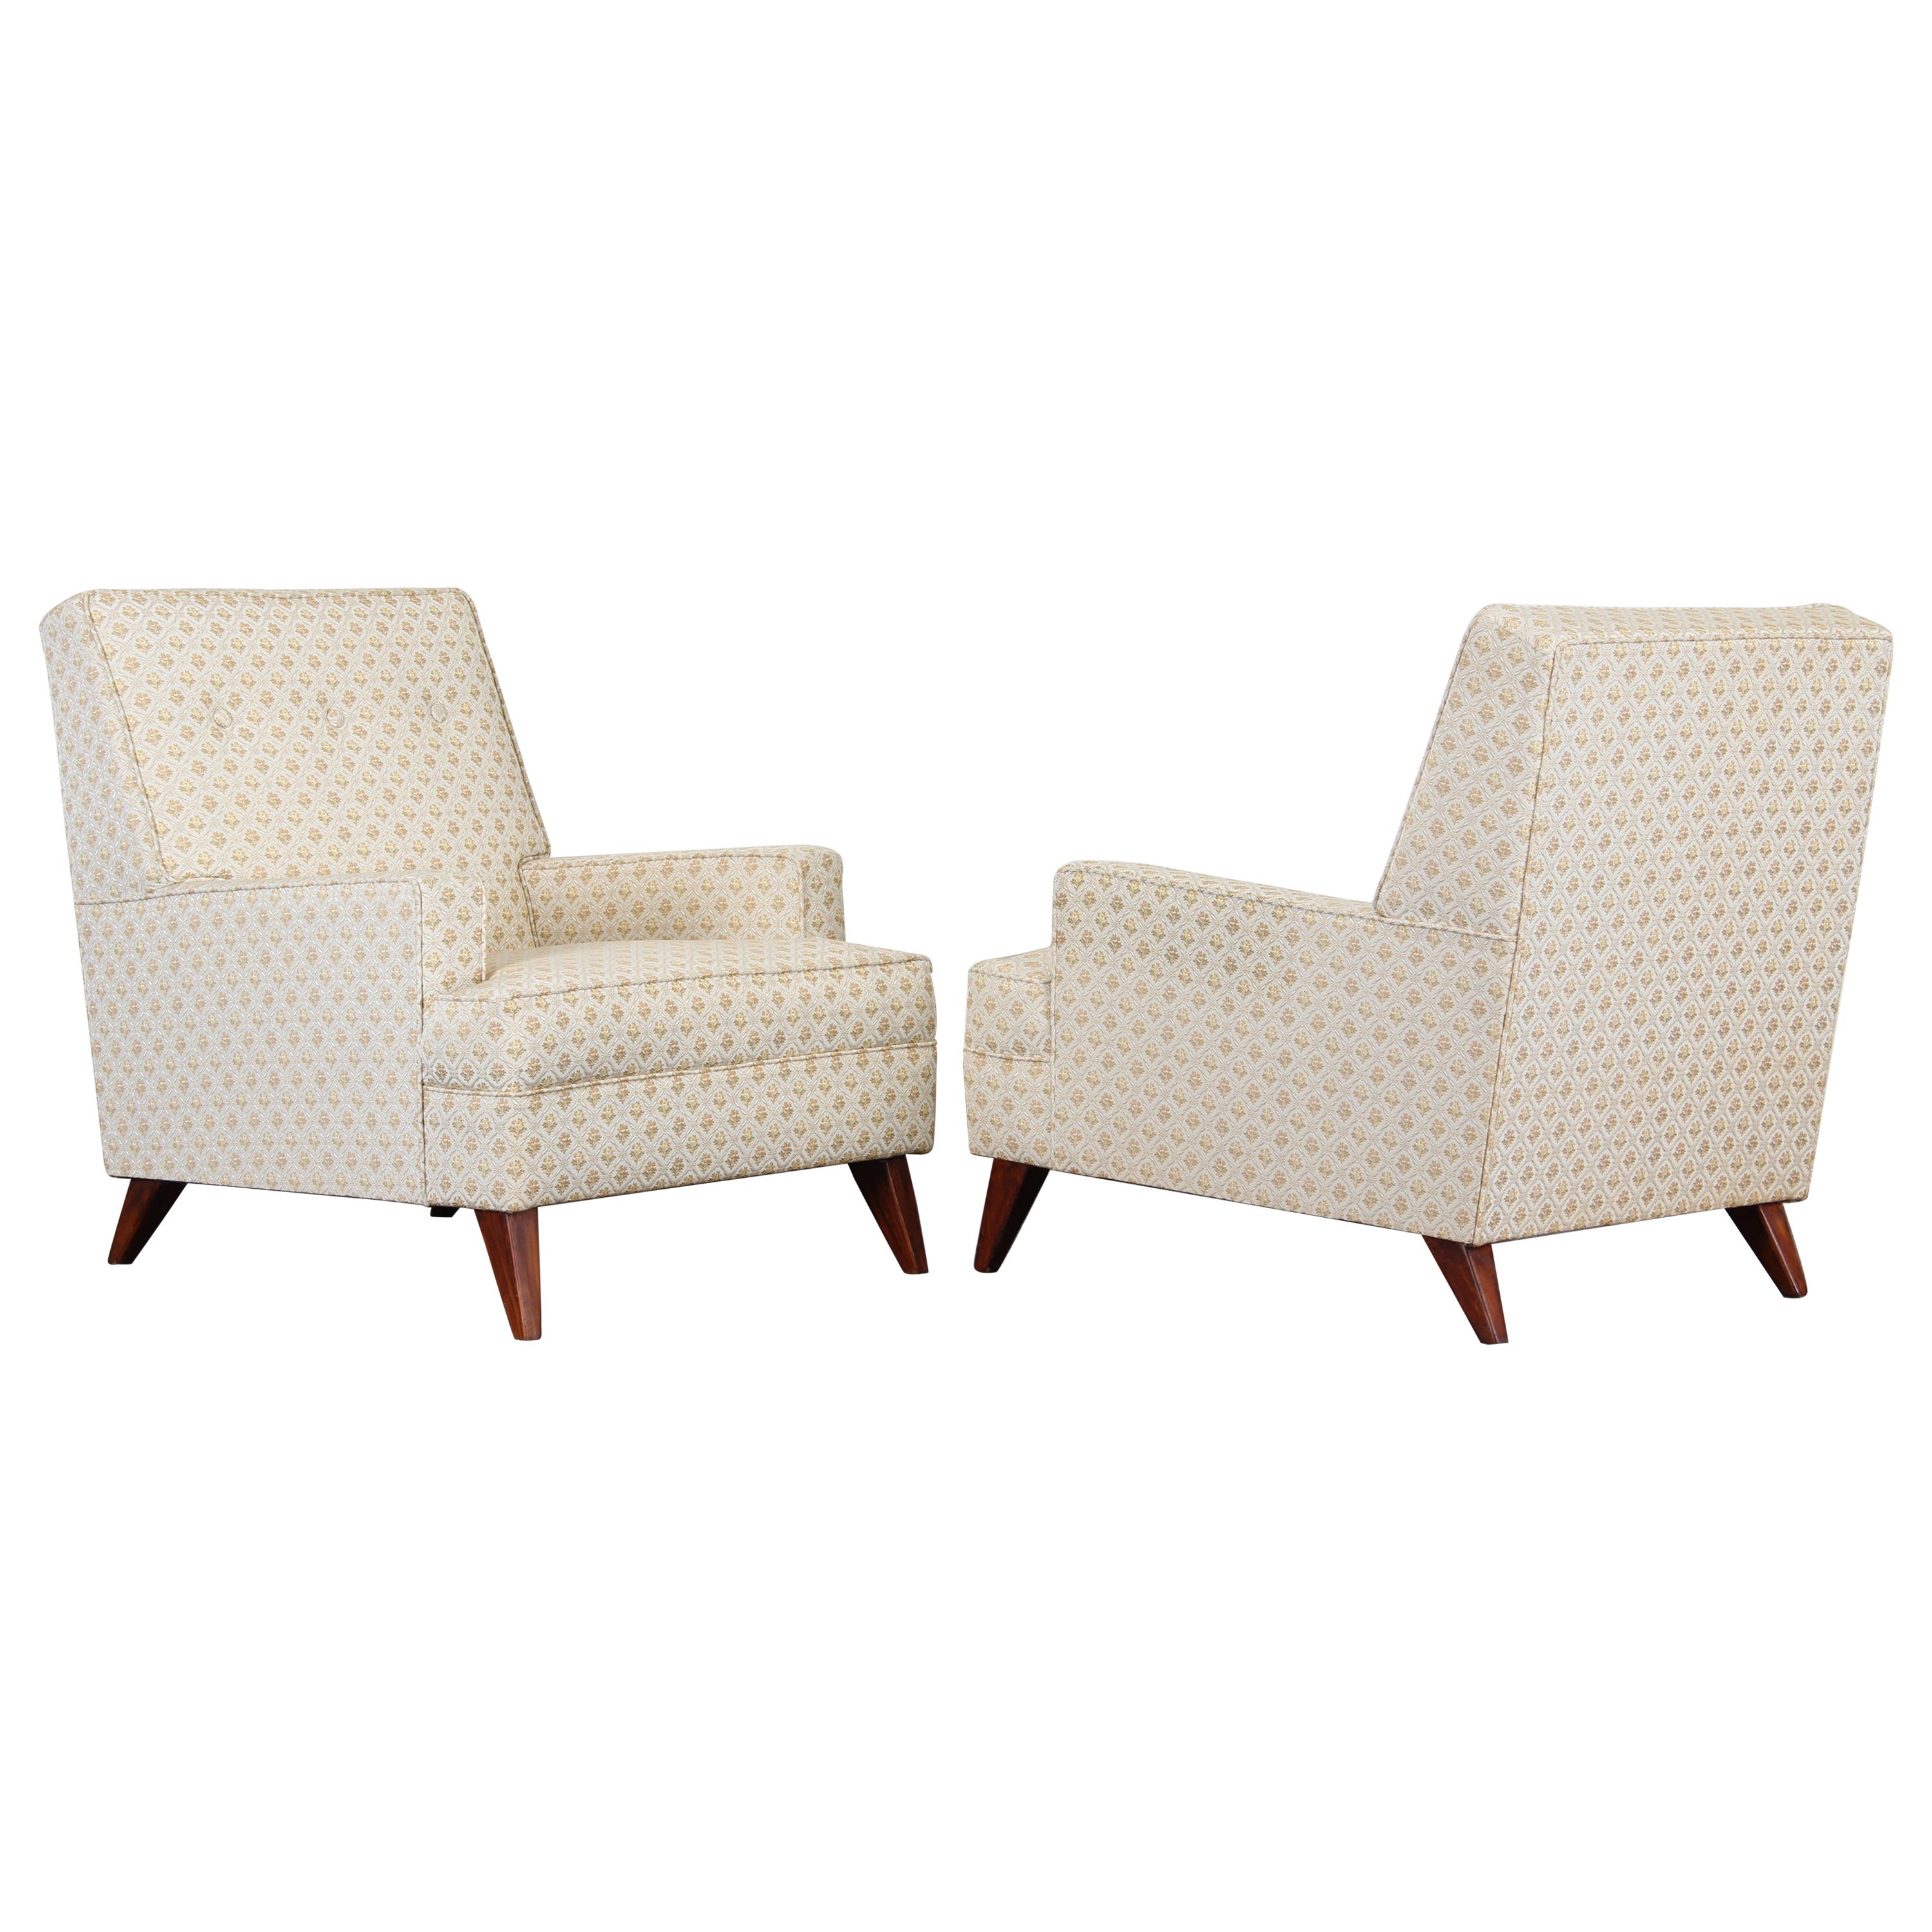 Pair of Robsjohn Gibbings Style Upholstered Lounge Chairs, 1950s